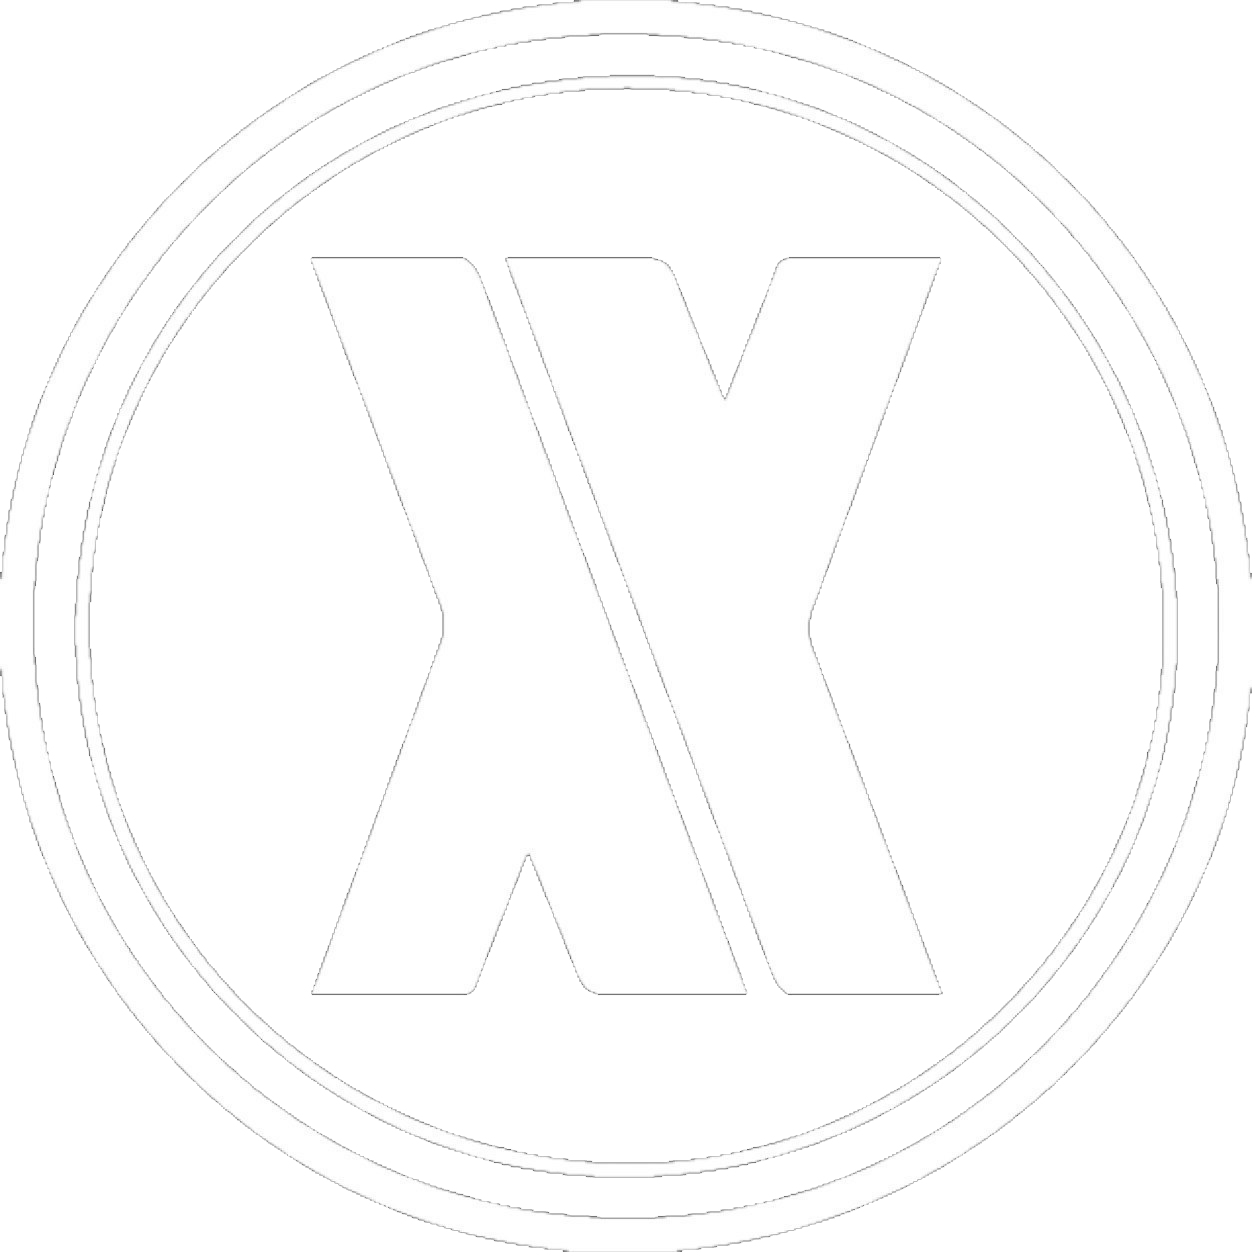 Blasterjaxx Logo Wallpaper Pixshark Image